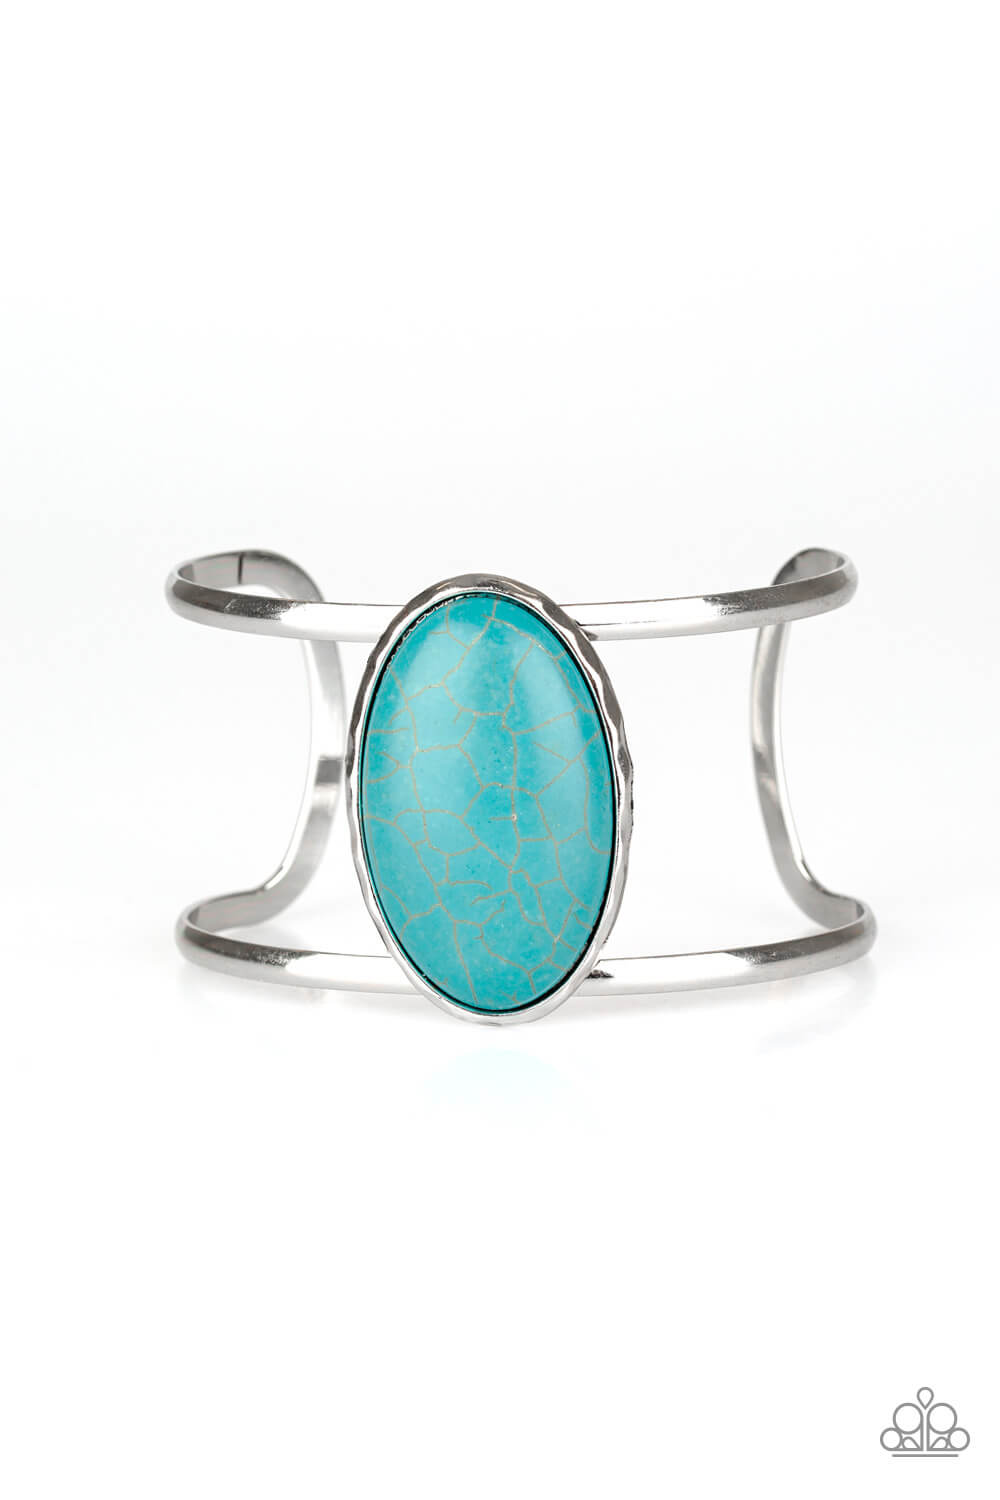 Desert Empress - Blue Stone Cuff Bracelet - Princess Glam Shop